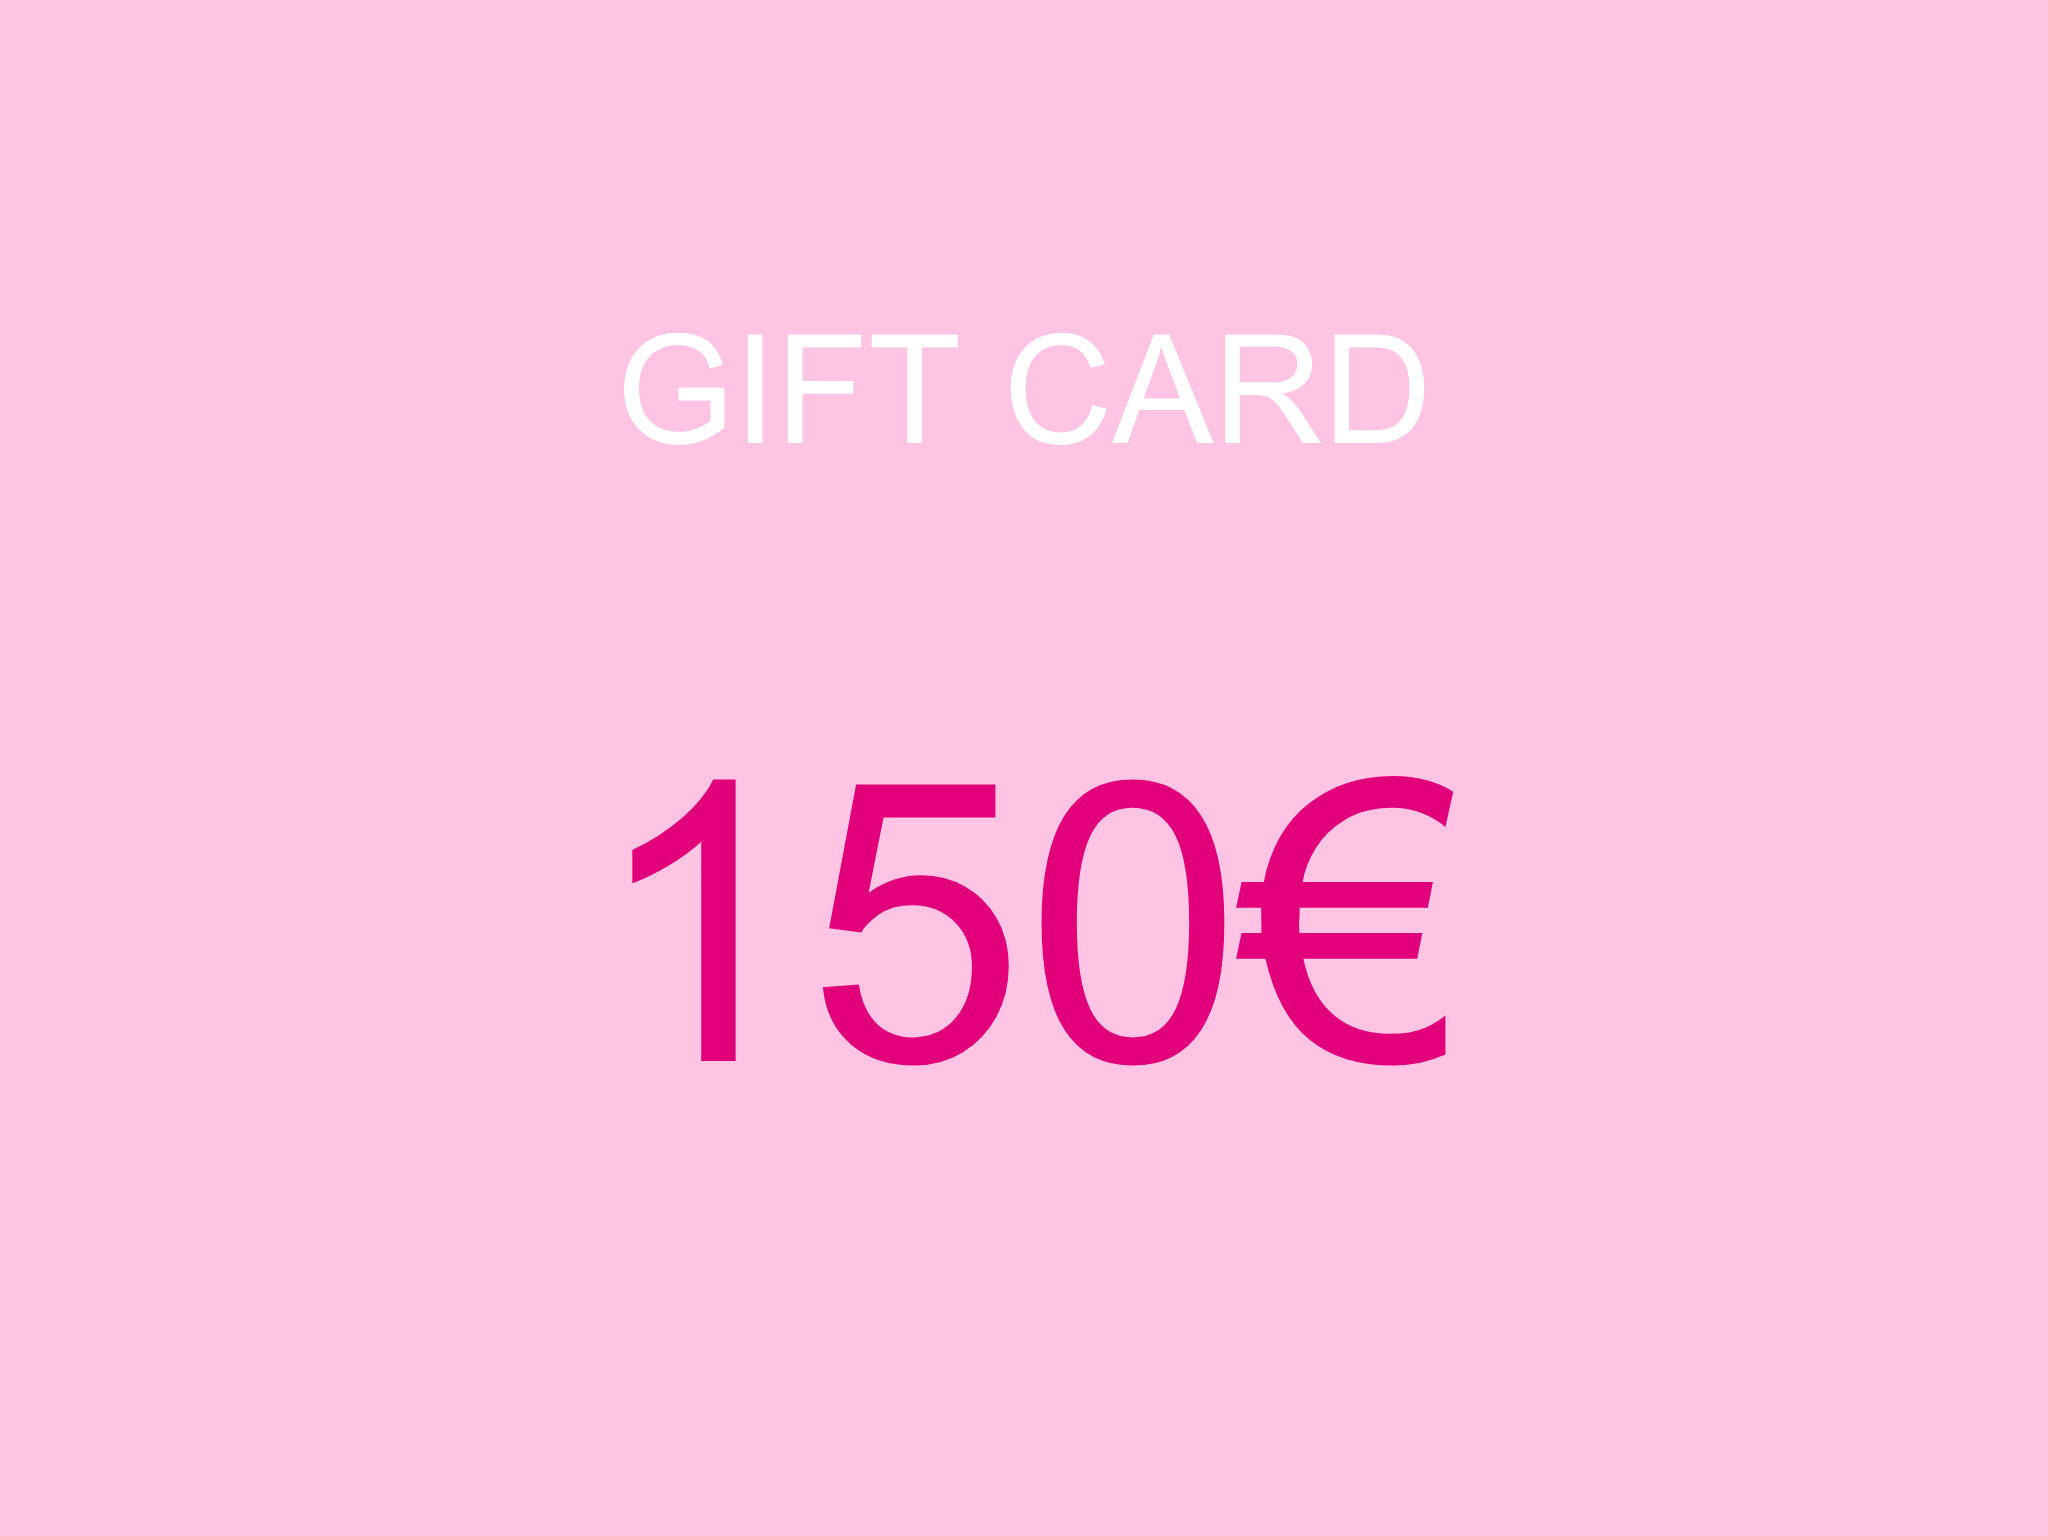 Gift card 150